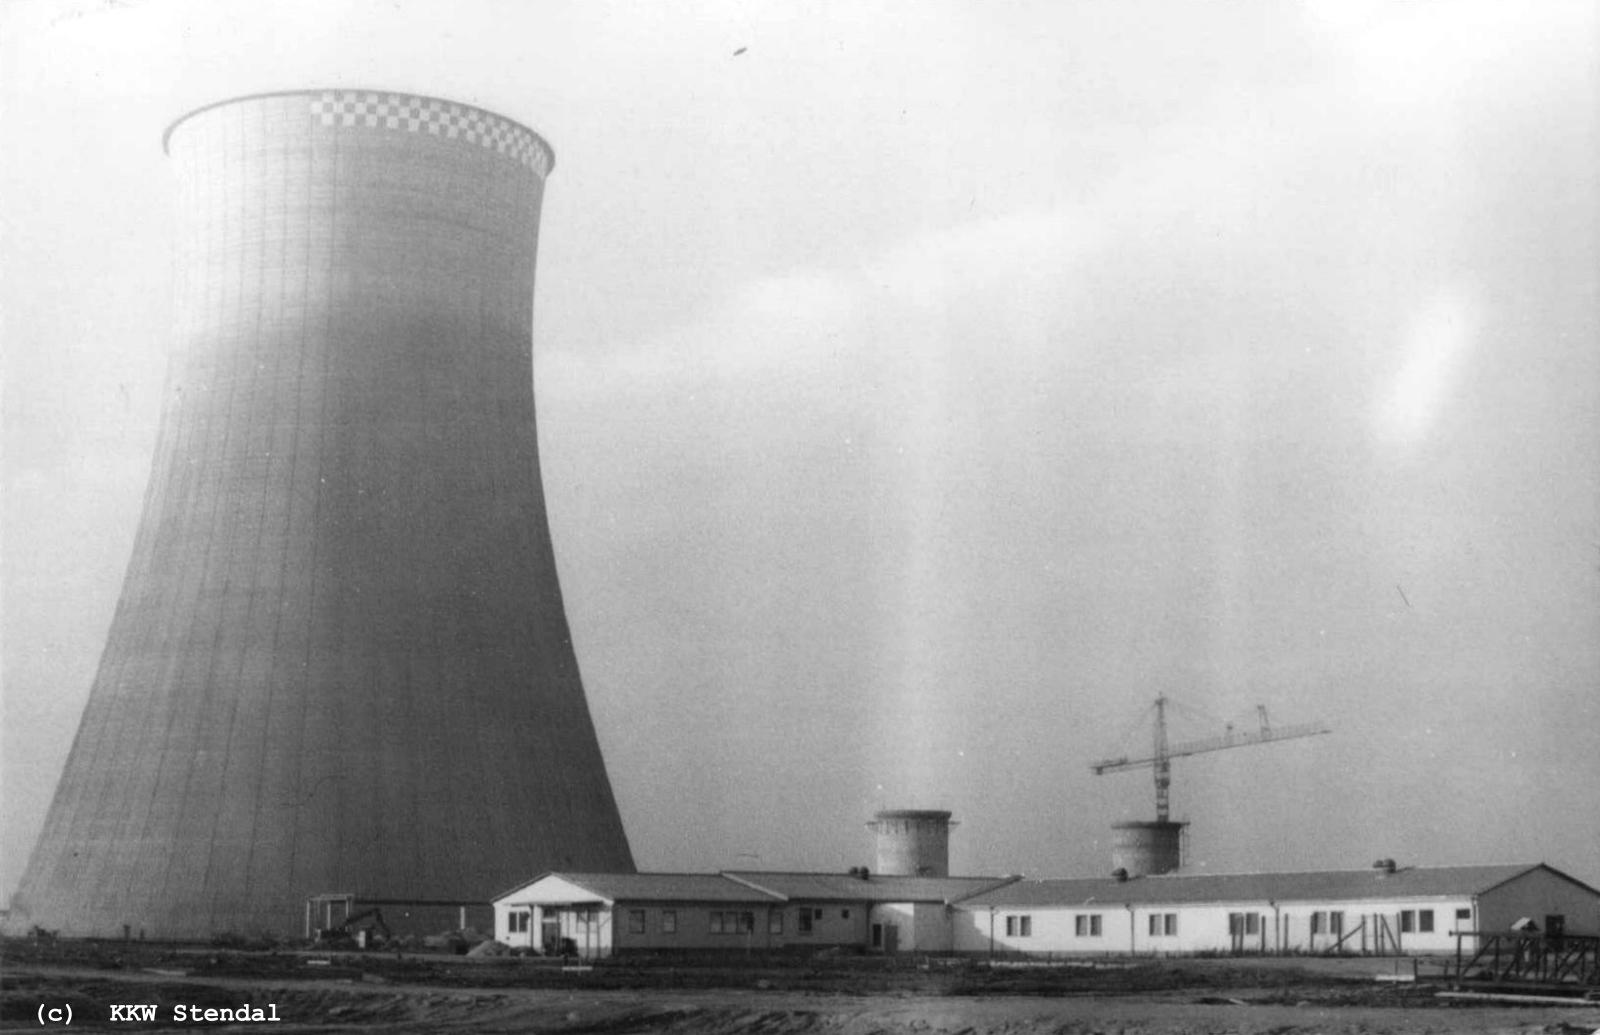  AKW Stendal, Baustelle 1988, Bauküche III 